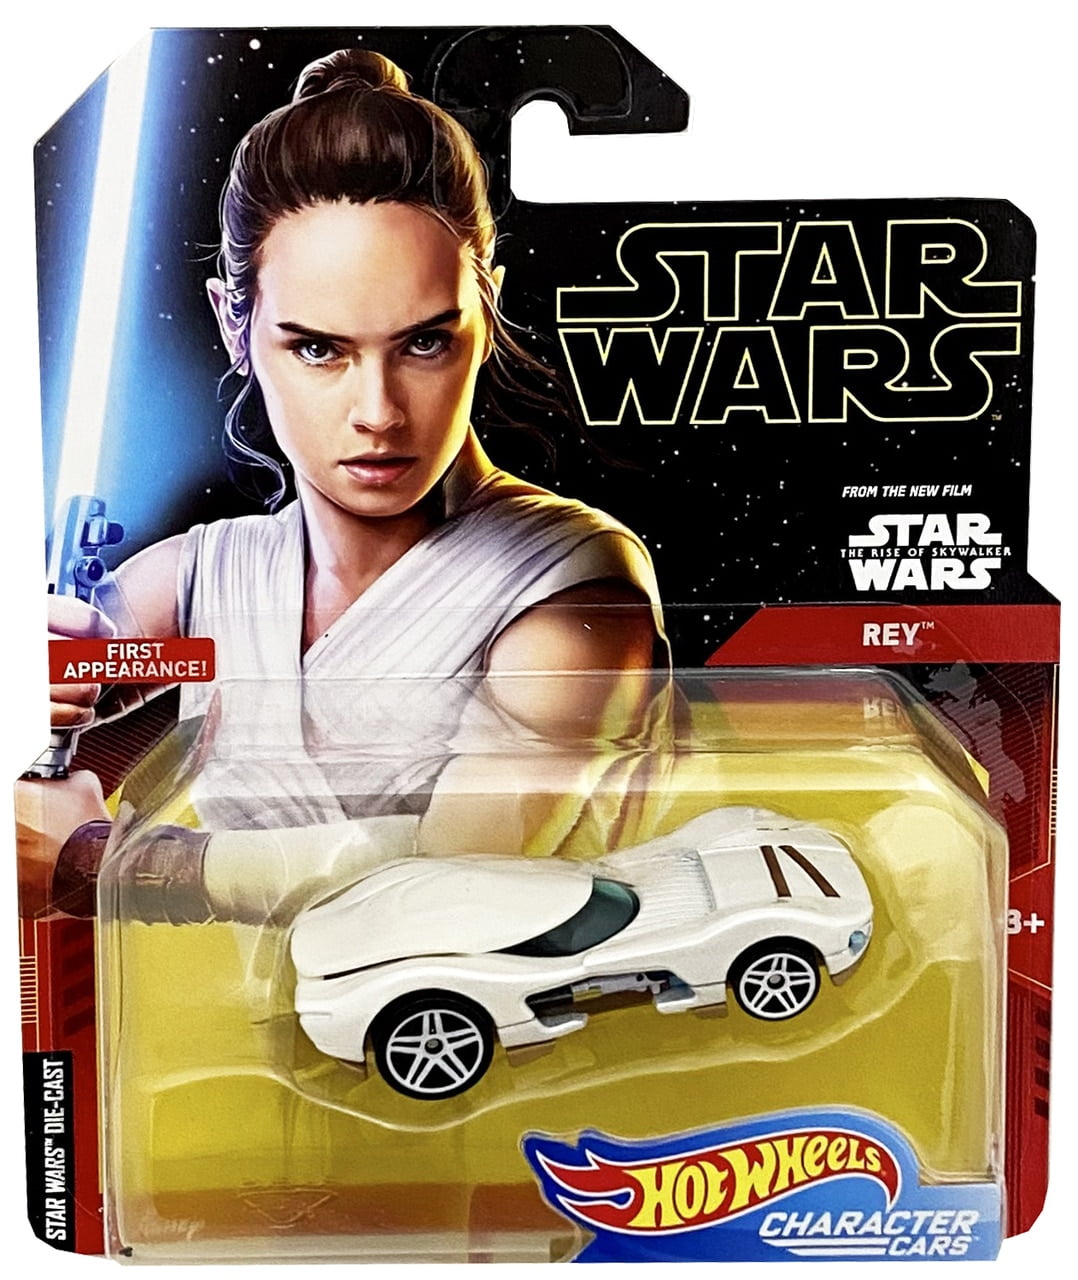 Disney Star Wars Hot Wheels Character Cars